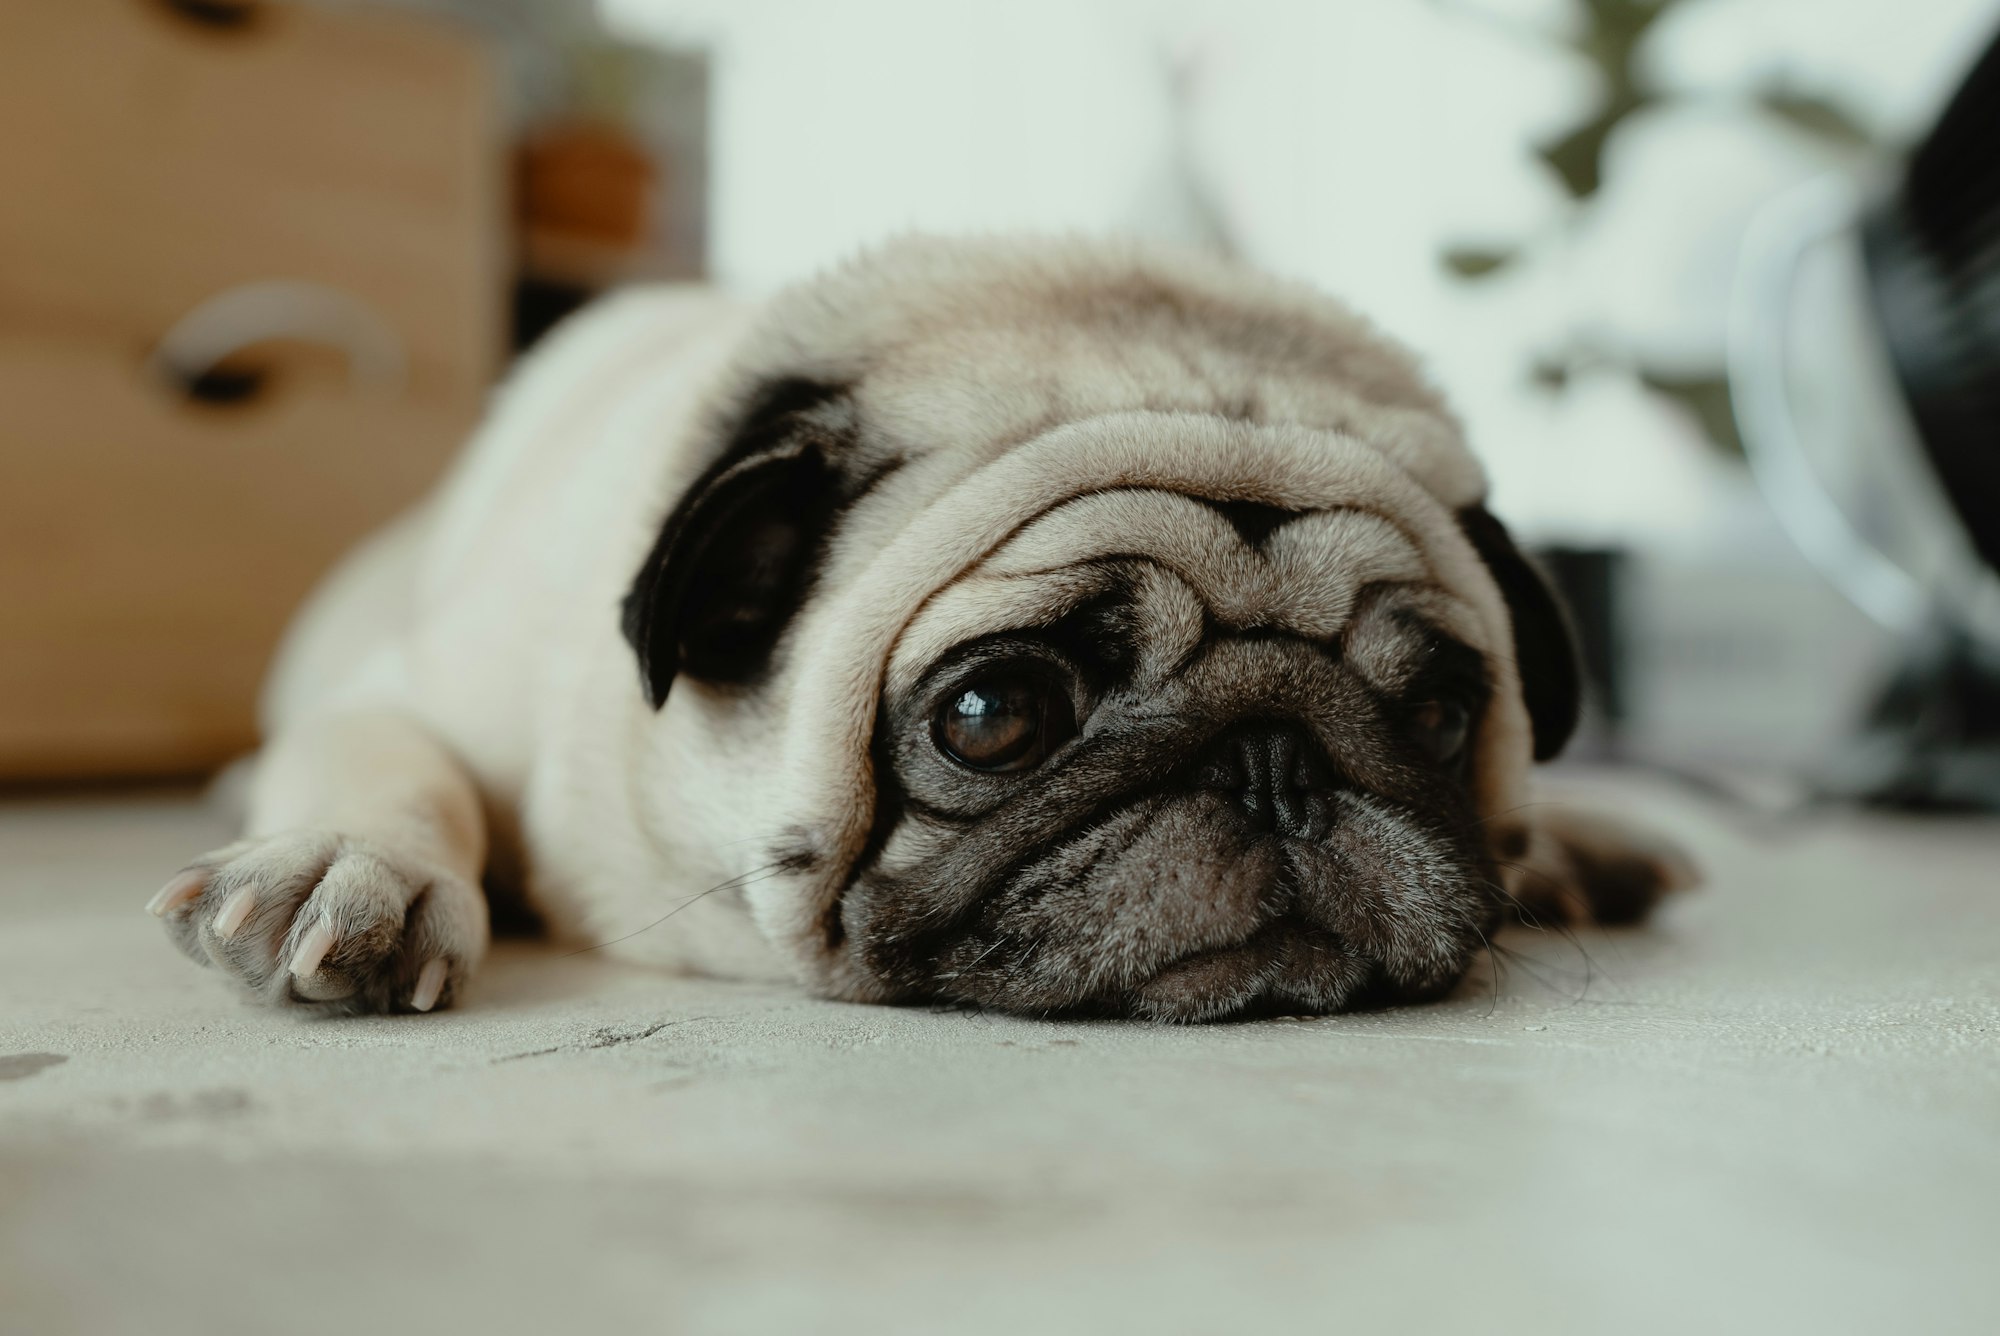 Pug looking sad on the floor